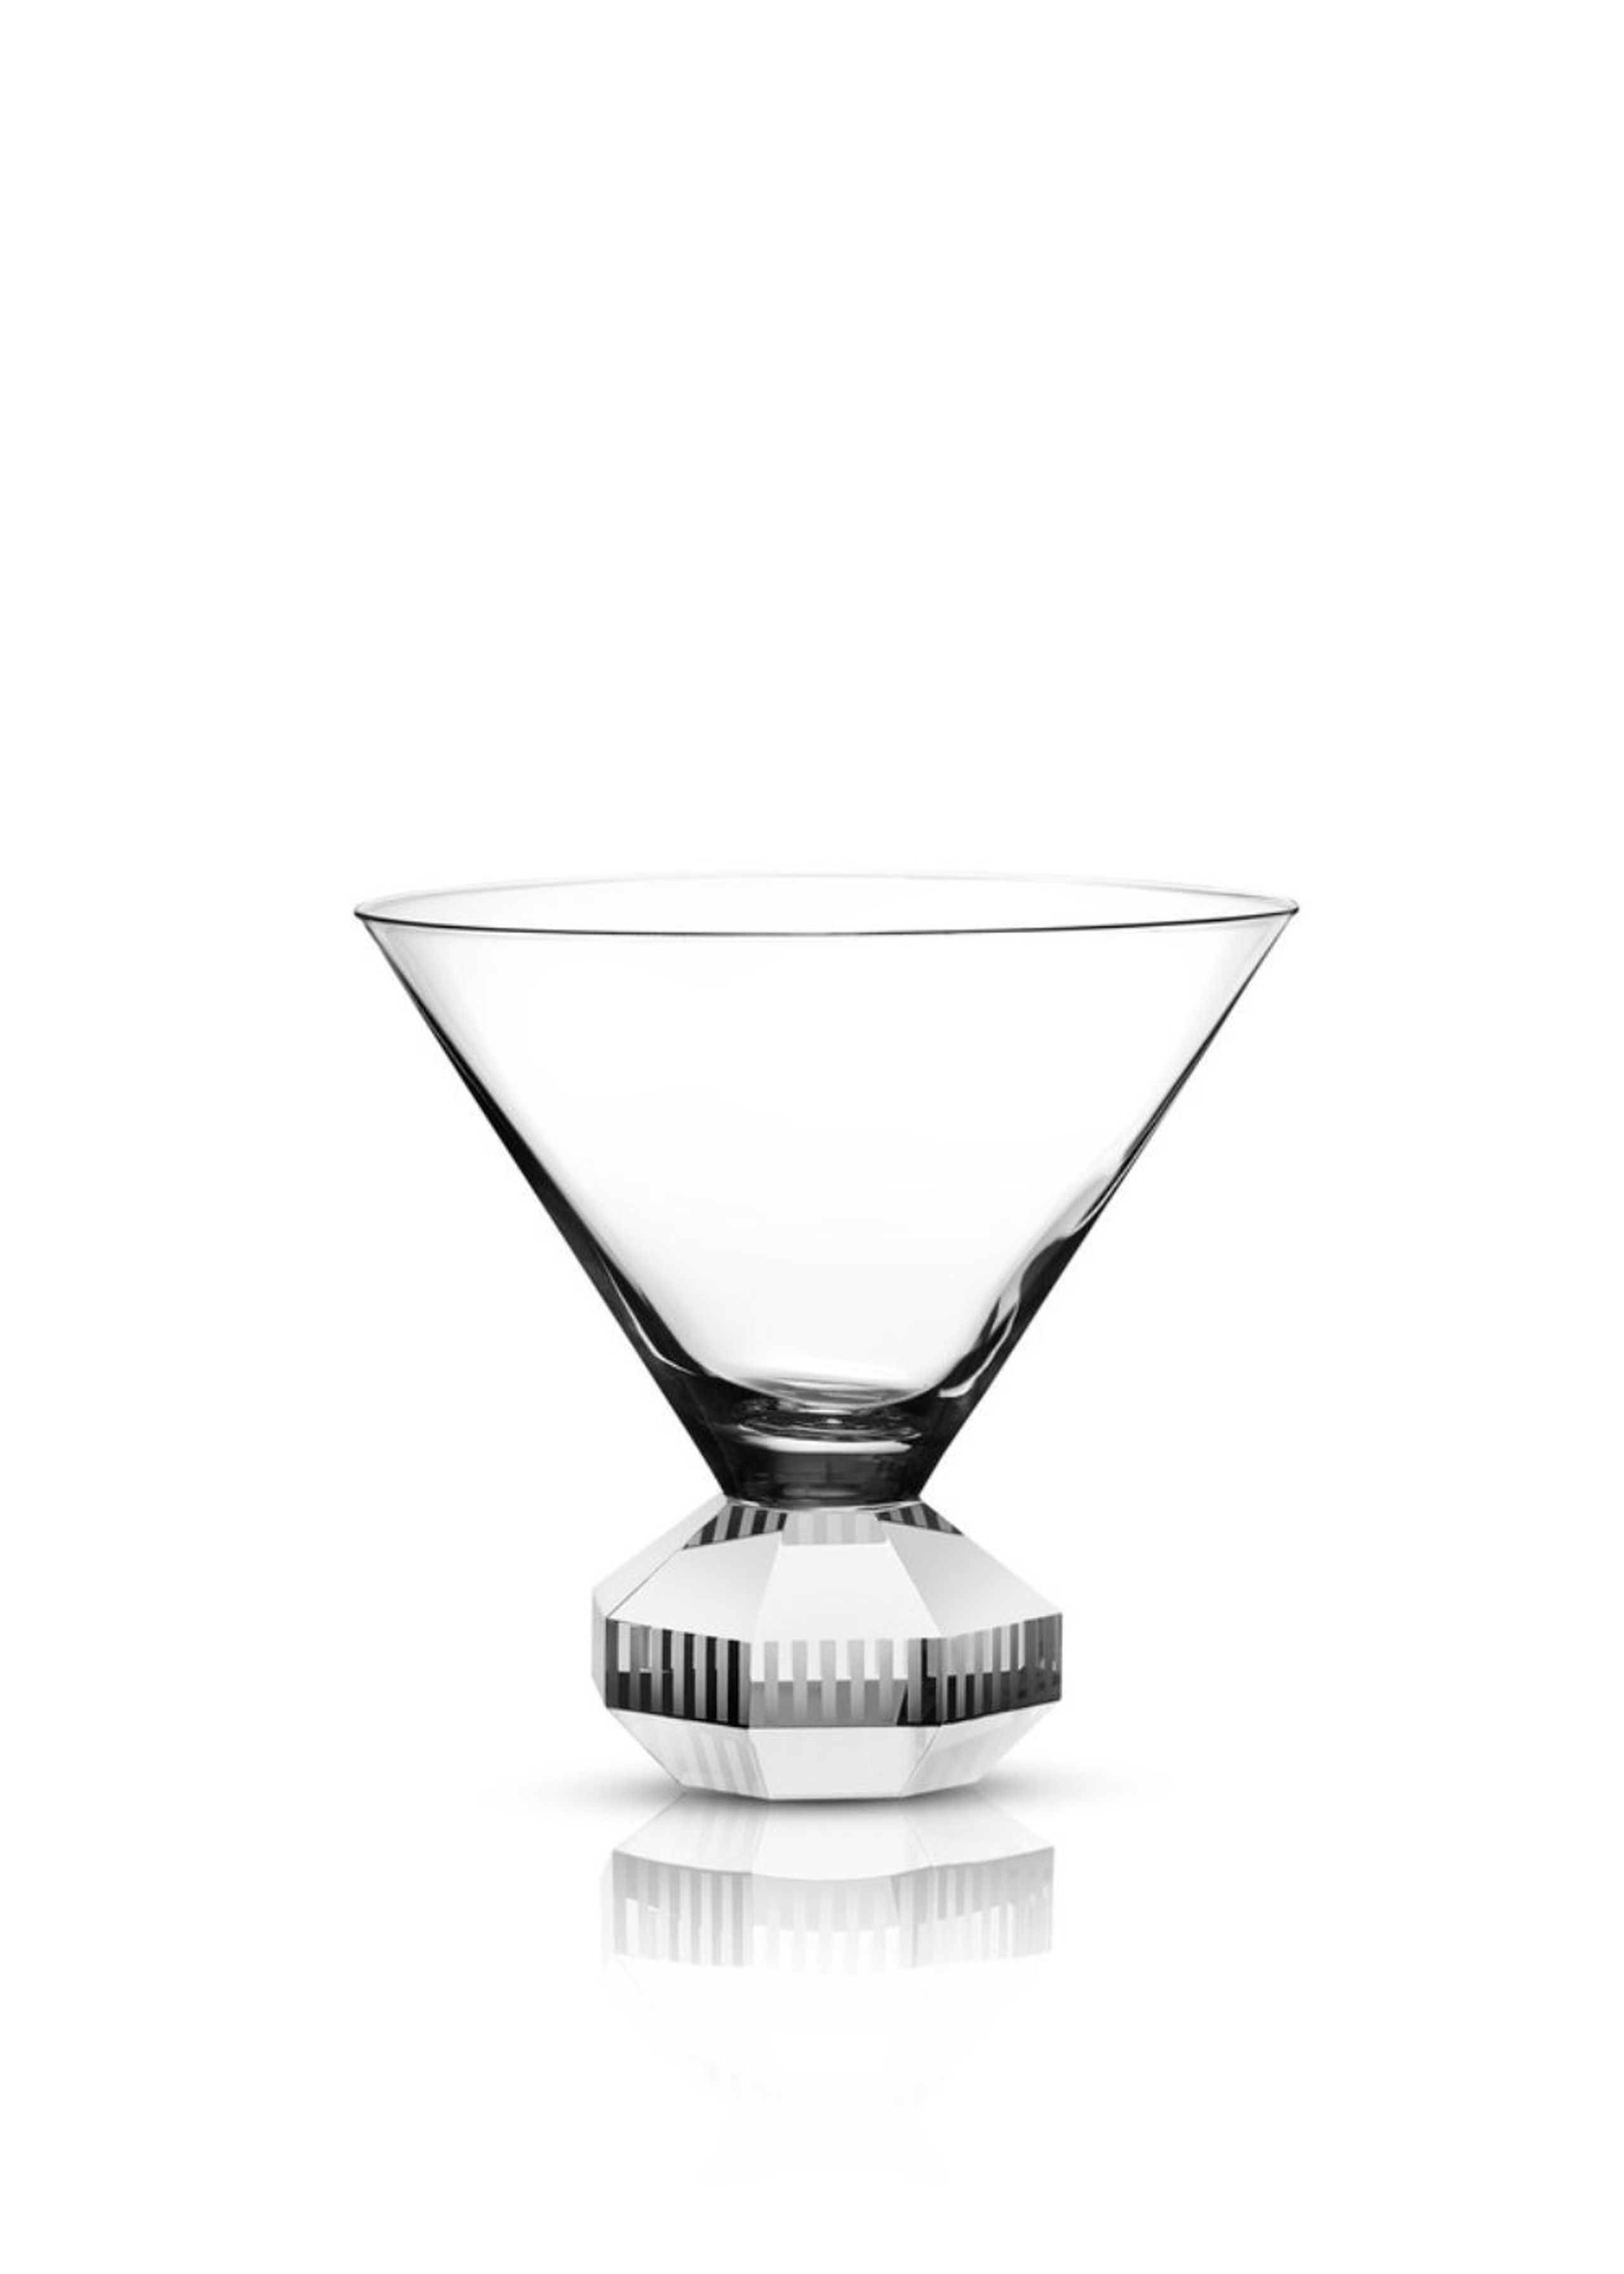 Reflections Copenhagen - Verre à cocktail - Chelsea Cocktail Crystal Glass, Set of 2 - Clear